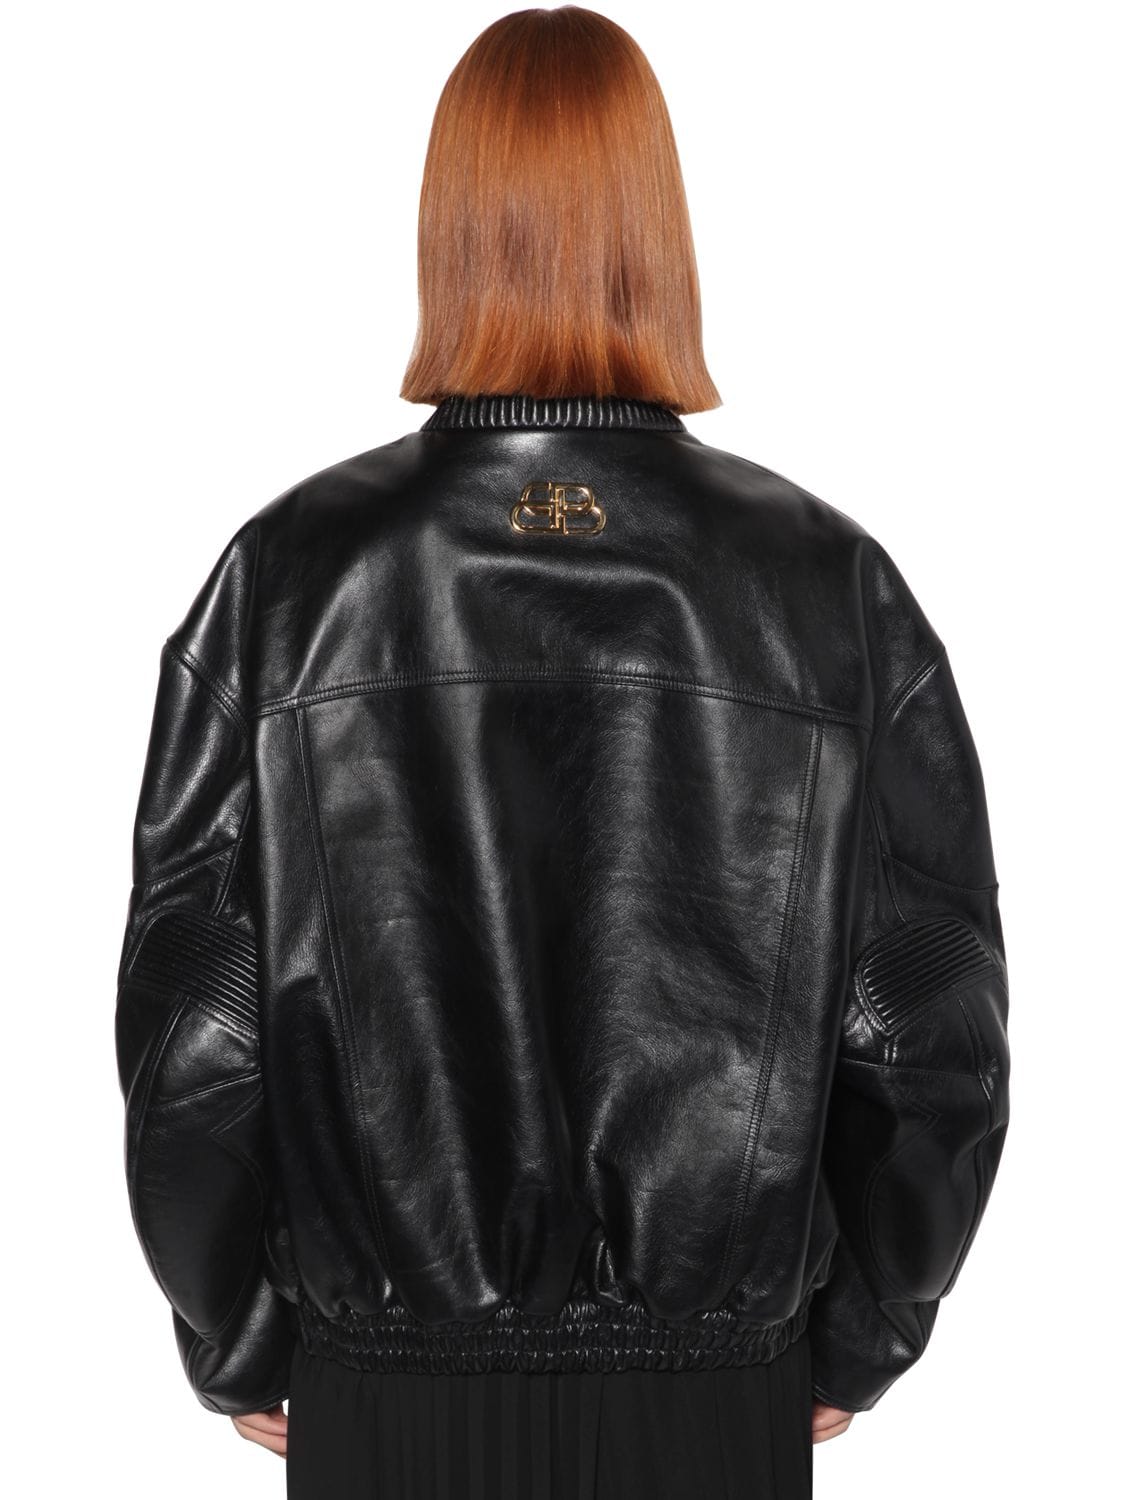 balenciaga leather biker jacket